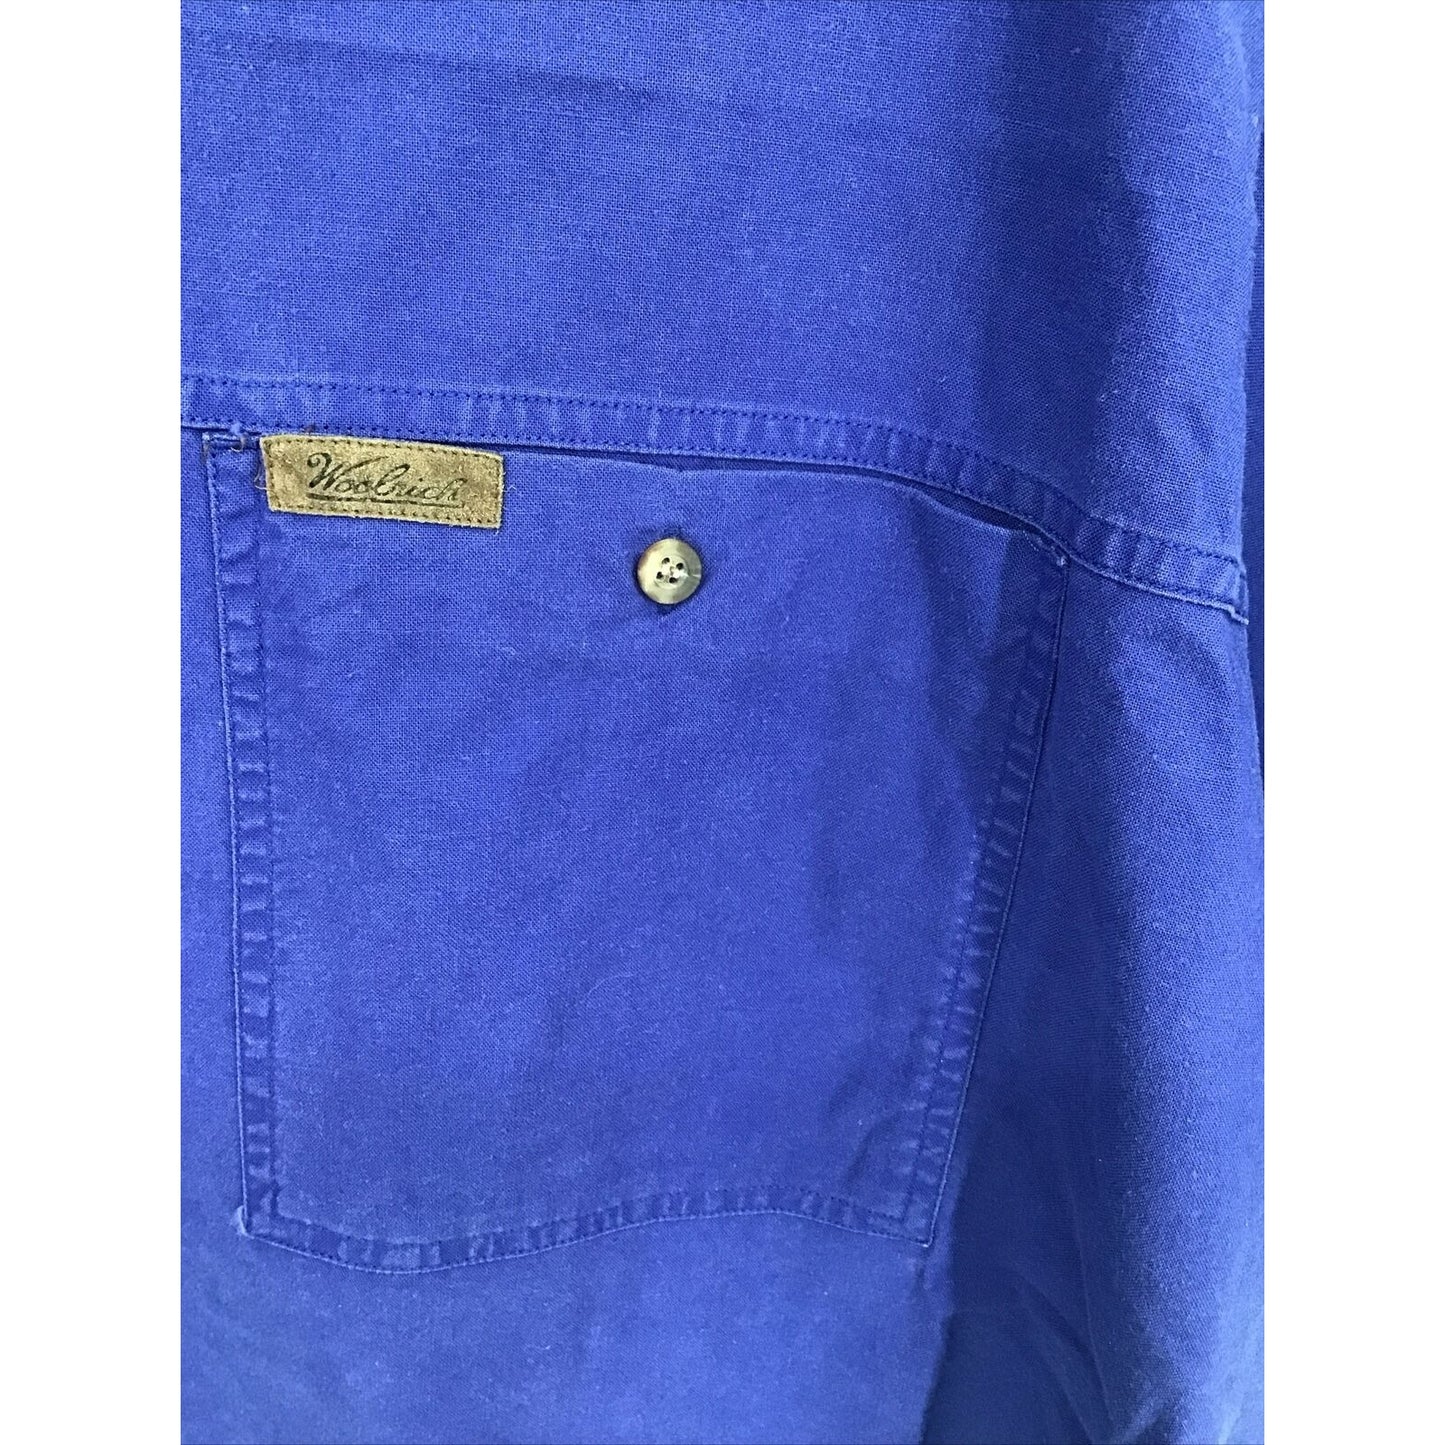 Vintage Men's Woolrich Blue Plaid Short Sleeve